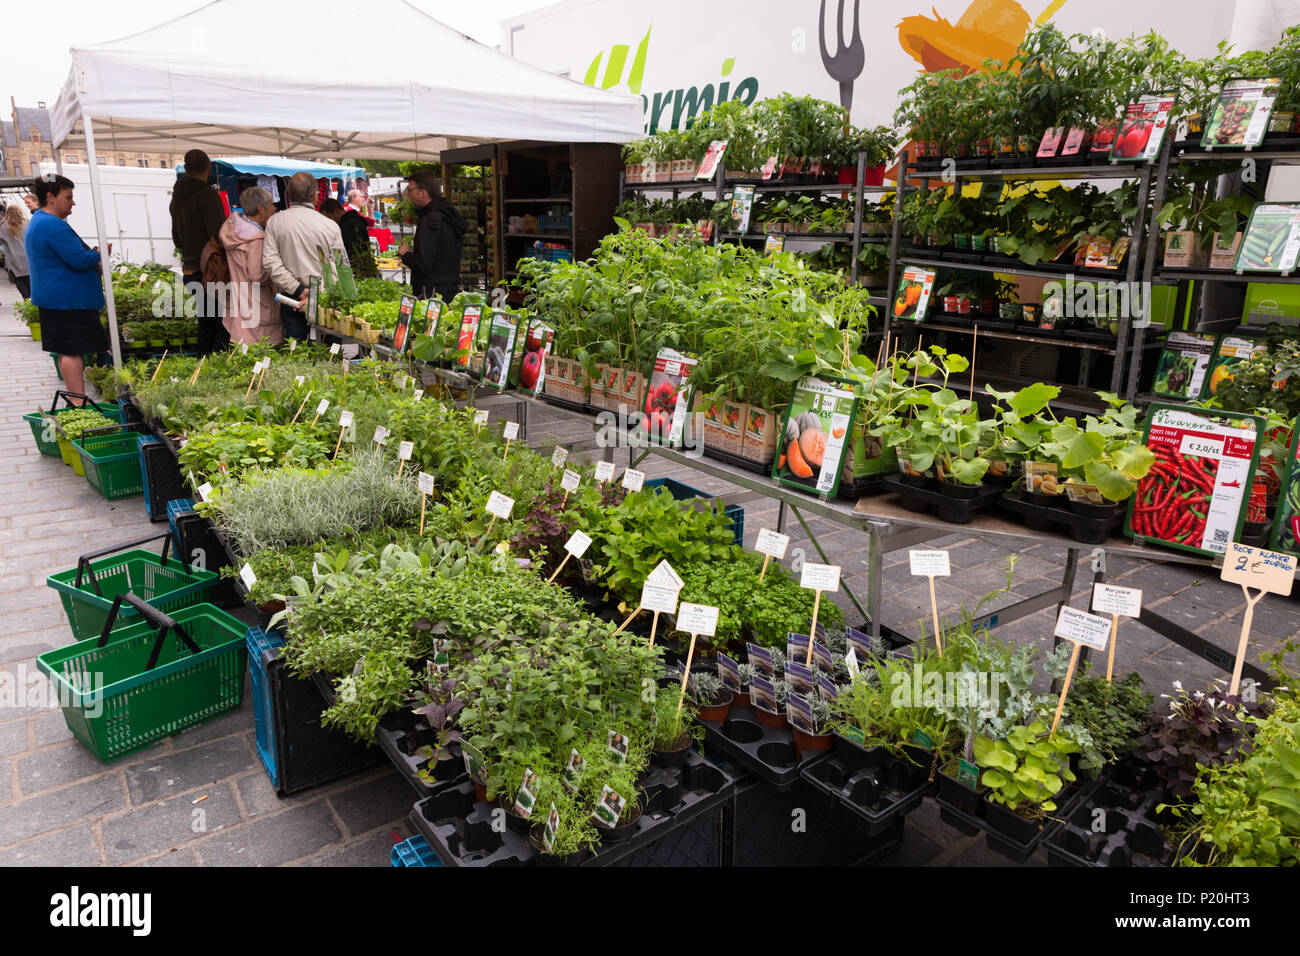 Market stall selling garden plants, Ypres, Belgium Stock Photo